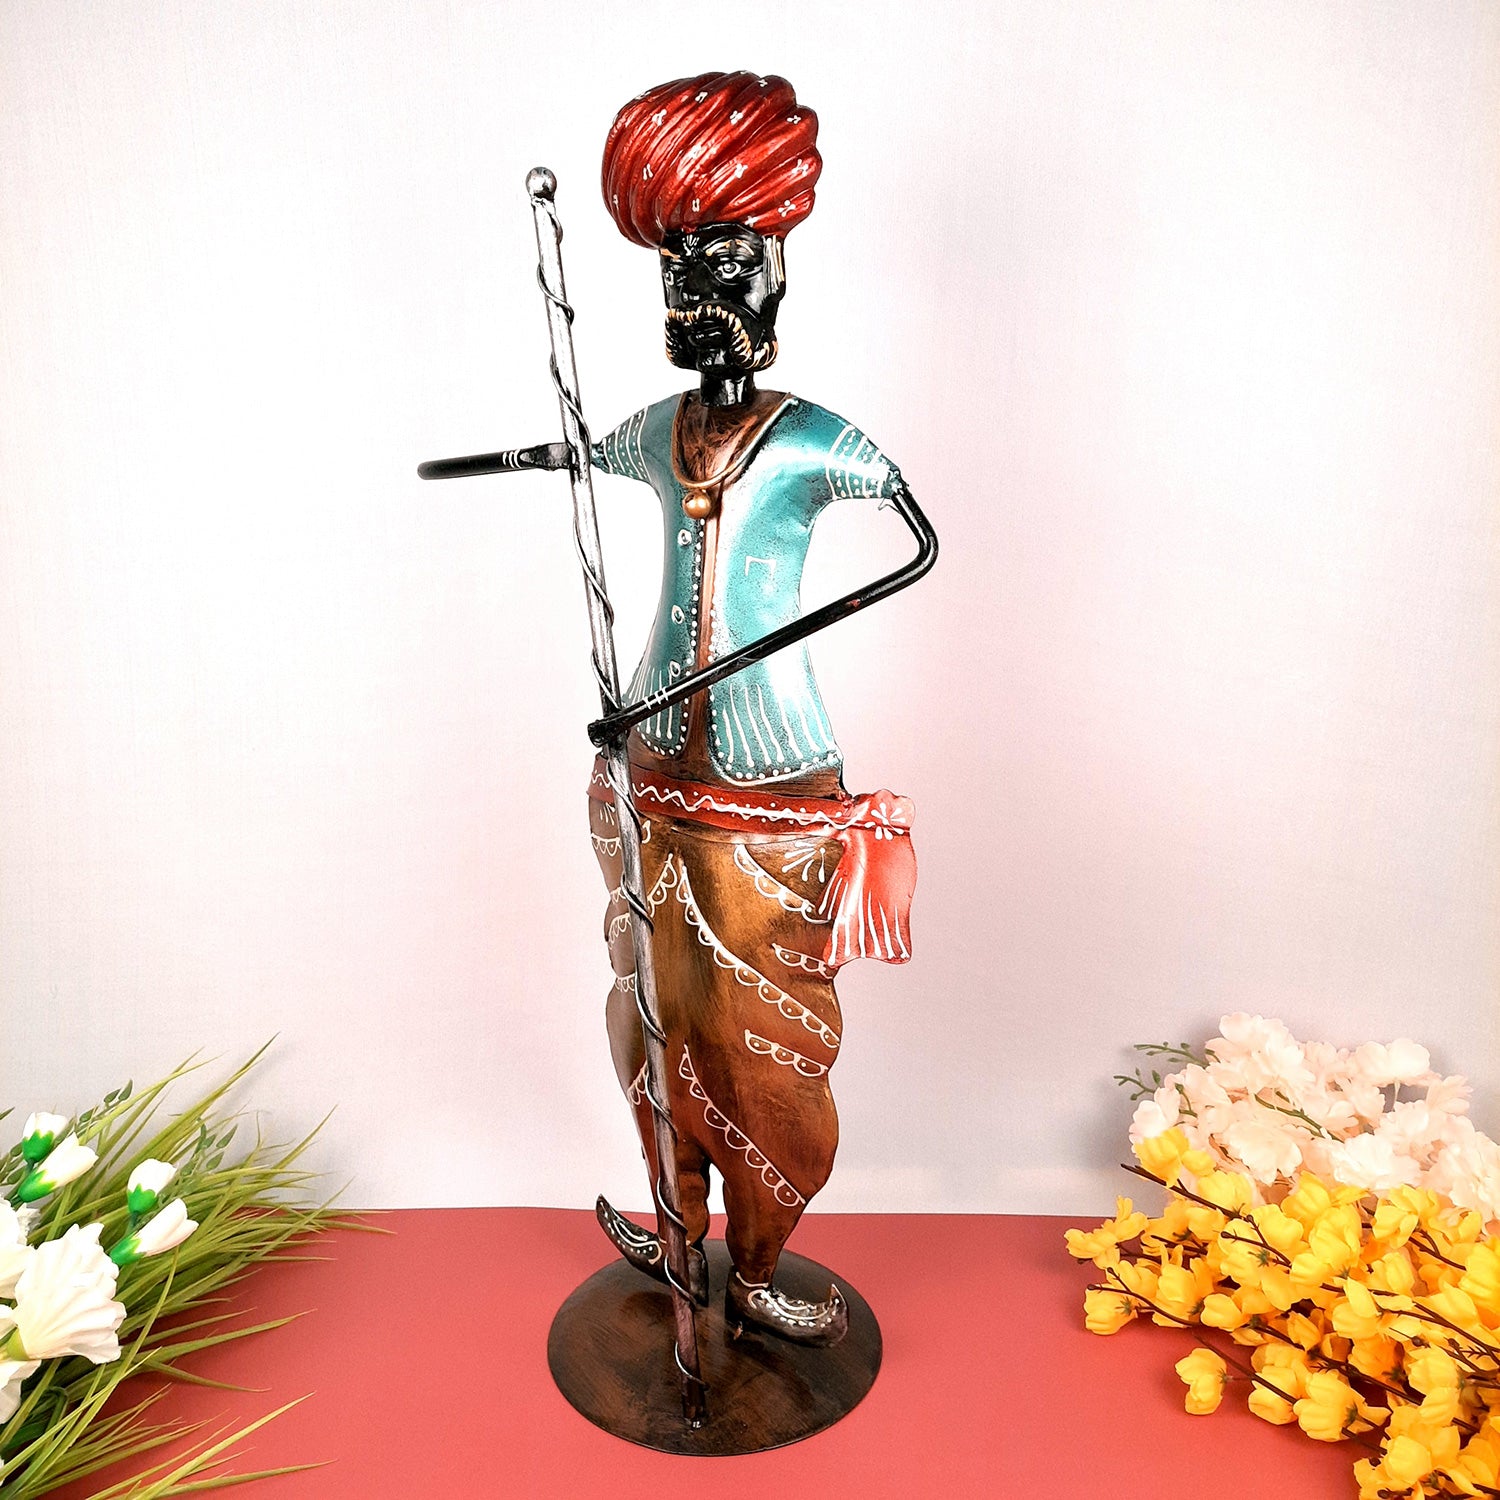 Showpiece Darbaan For Home Decor | Handicraft Figurines - For Entrance, Corner, Living Room, Office Decoration |Big Showpieces For Housewarming Gifts - 30 Inch - Apkamart #Color_Green